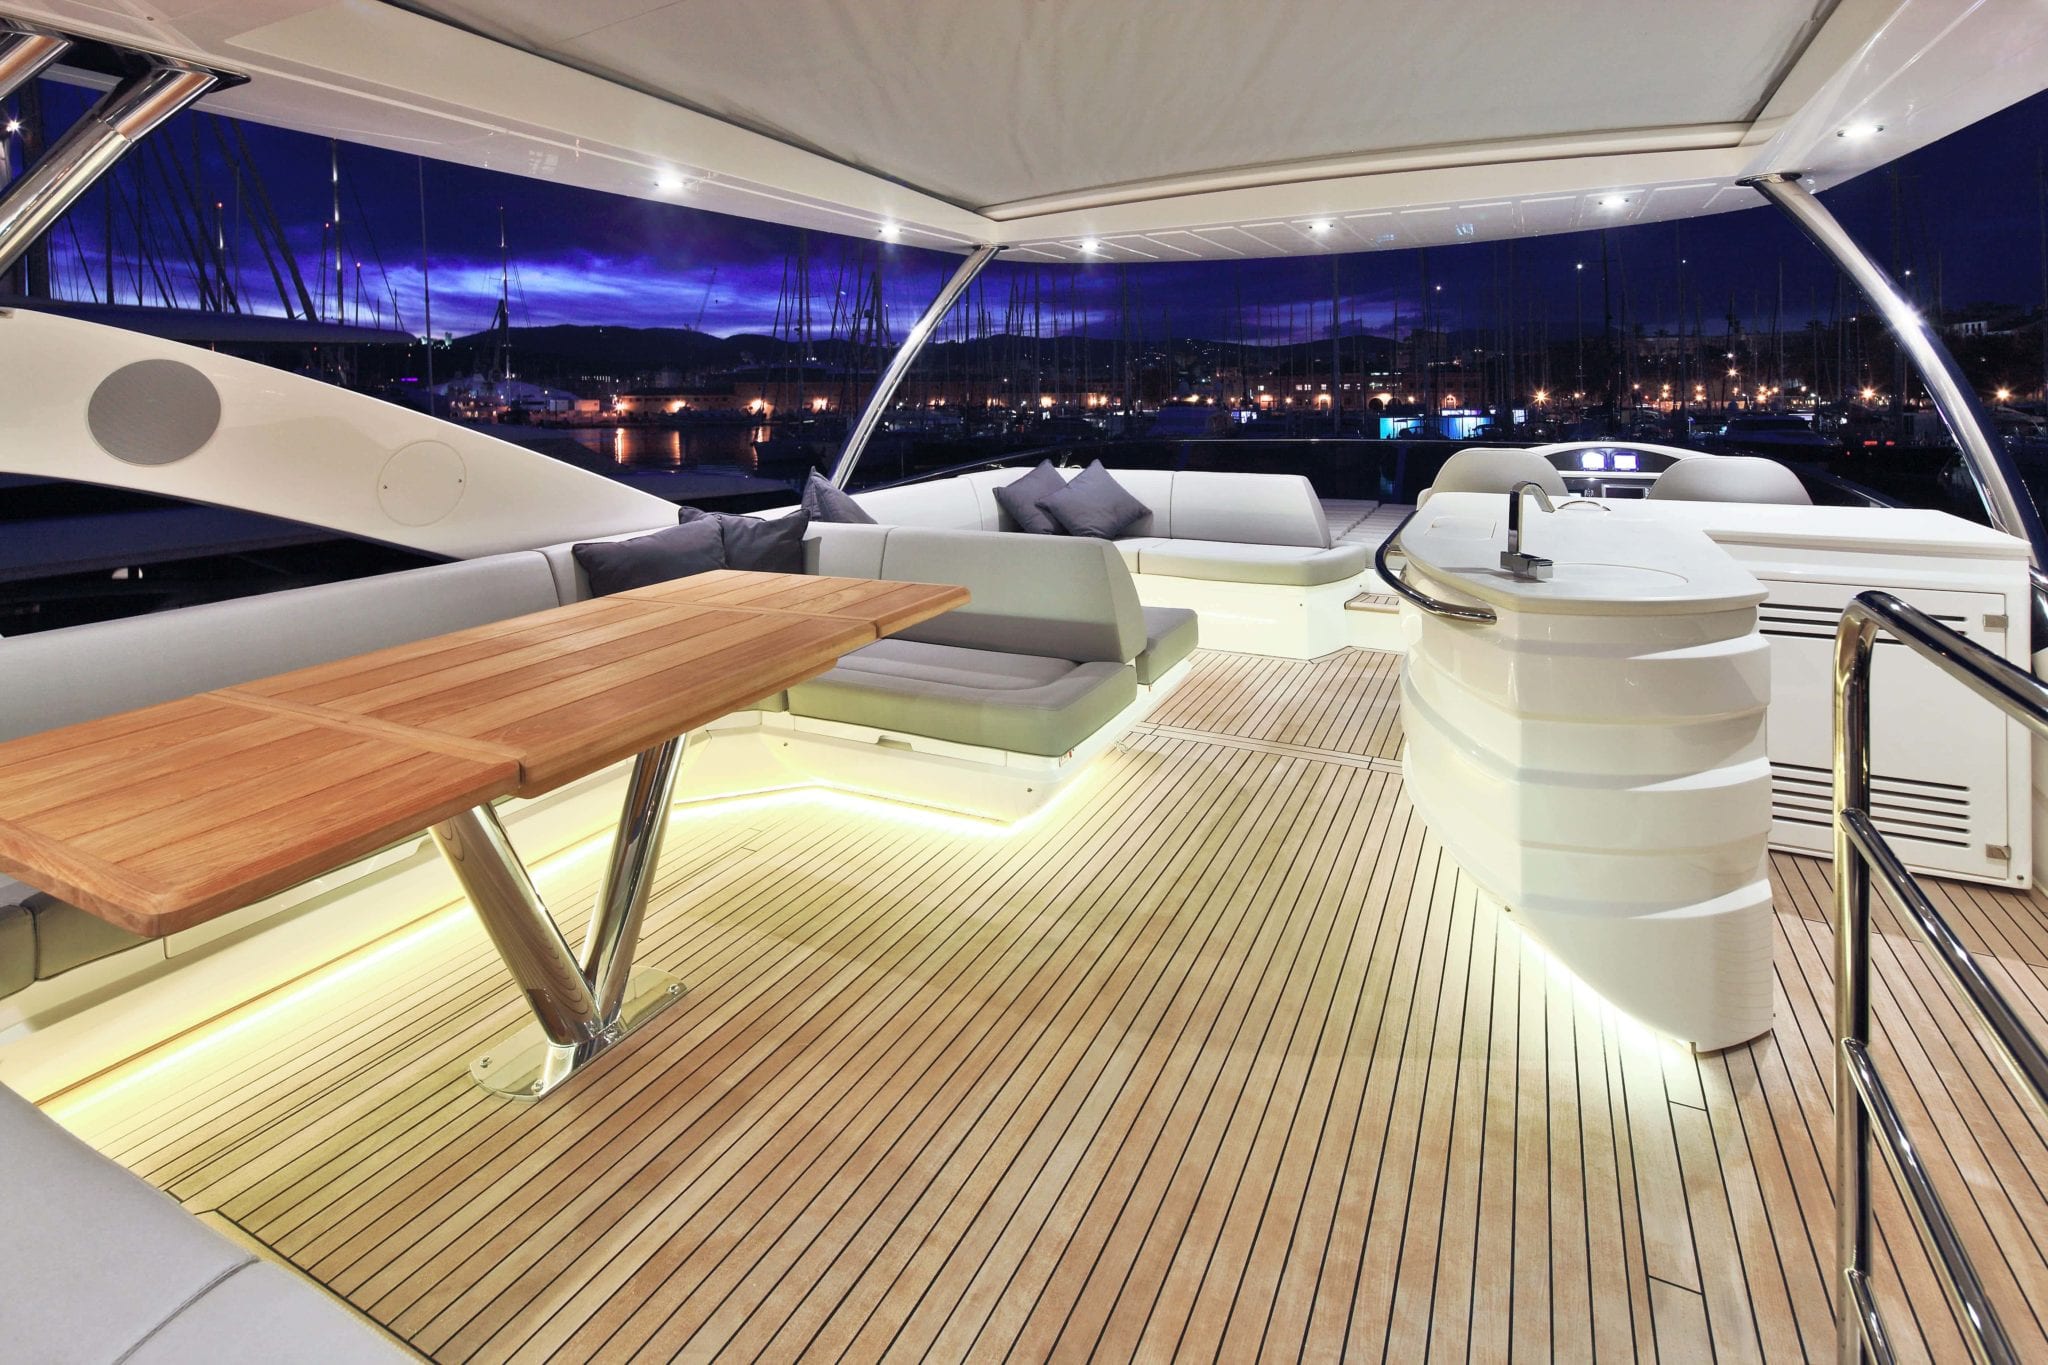 Explore the flybridge here on the luxury sunseeker yacht.